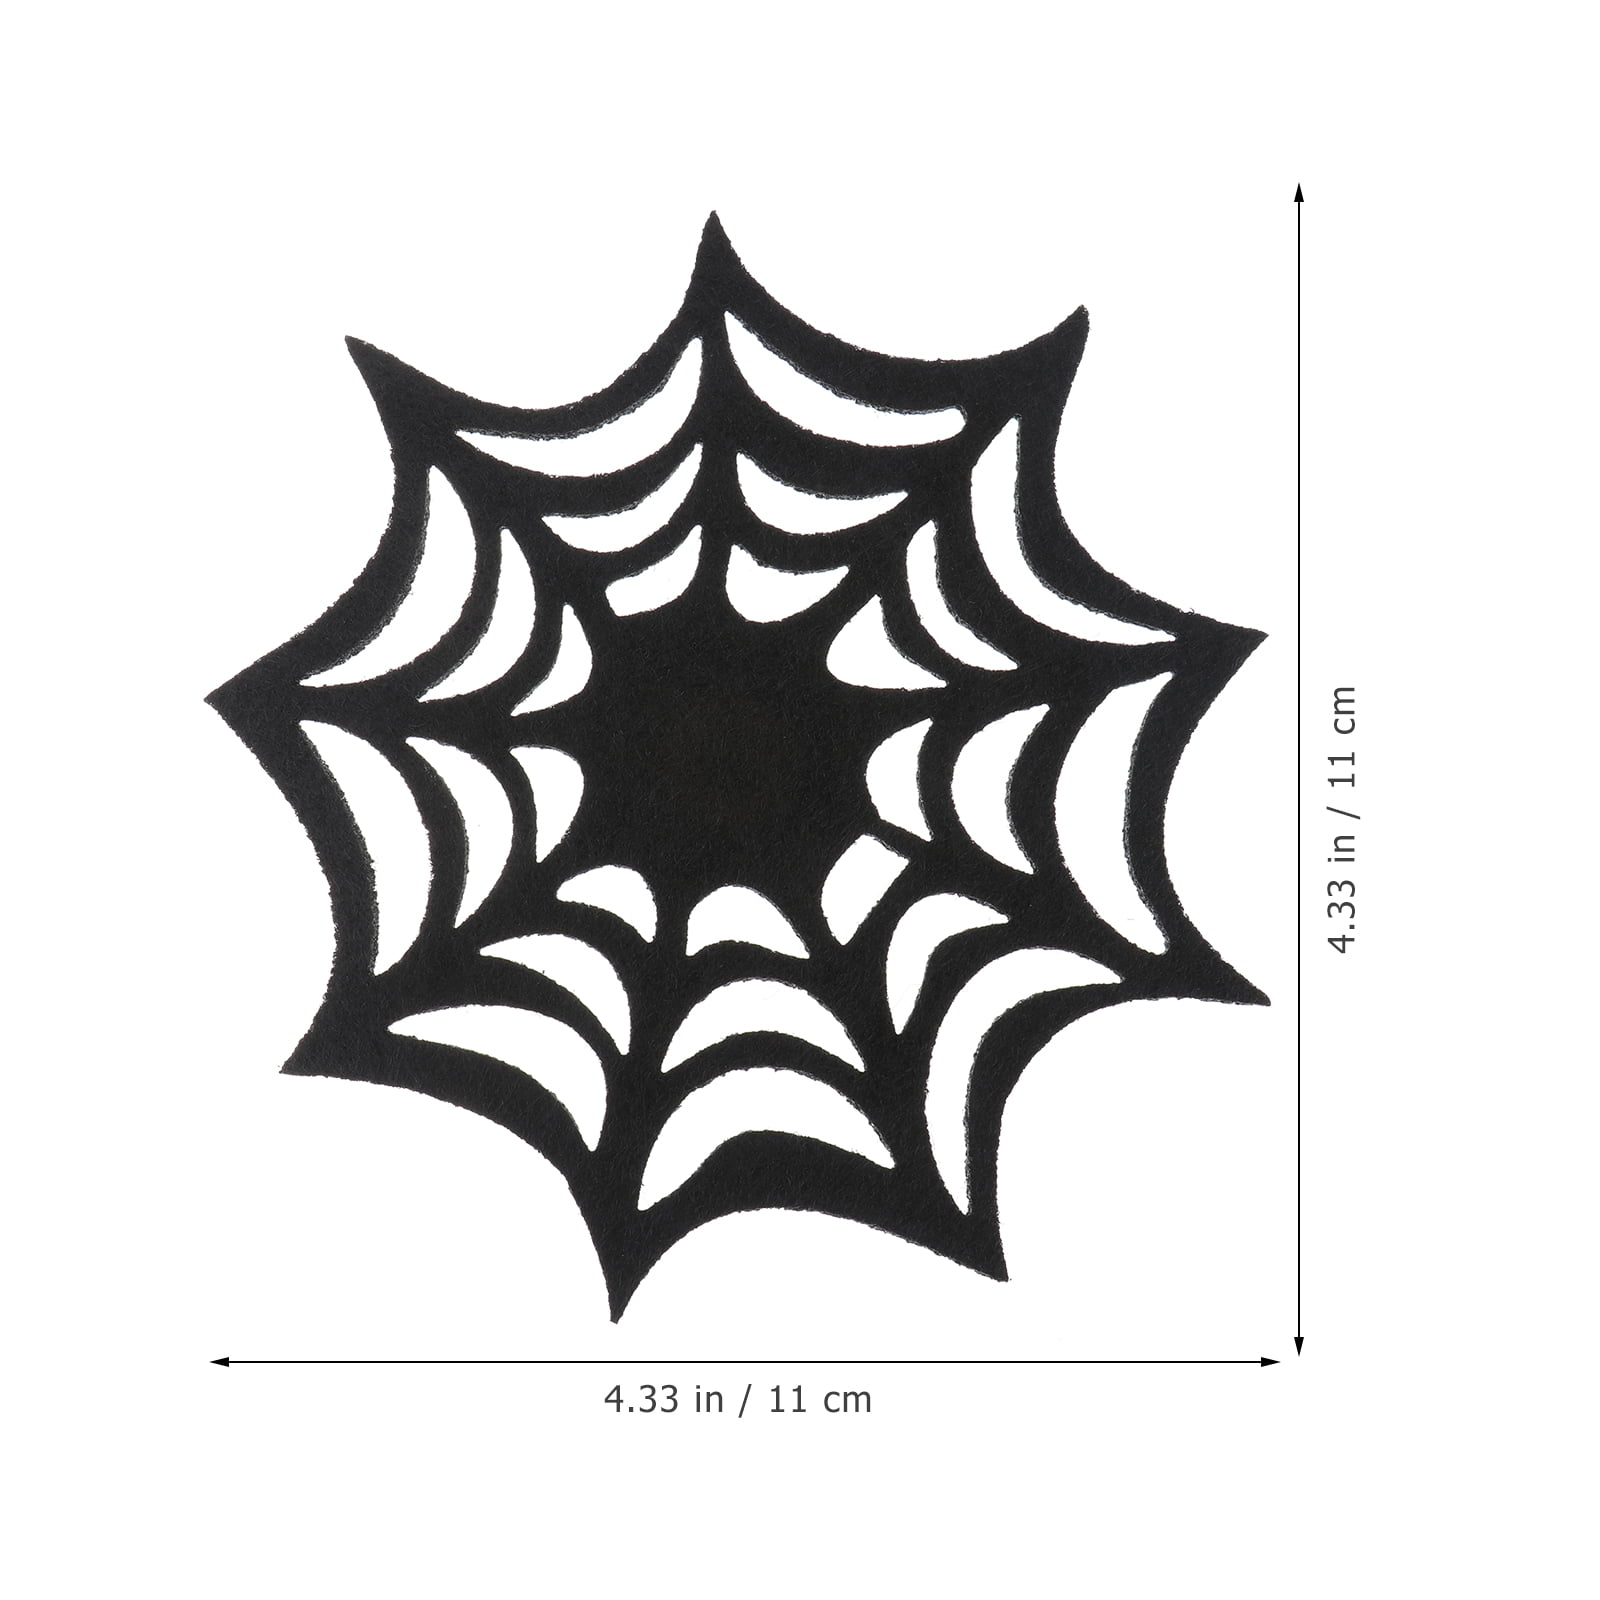 10pcs Coasters Spider Web Placemat Cup Mat Holder Decorarion Supplies